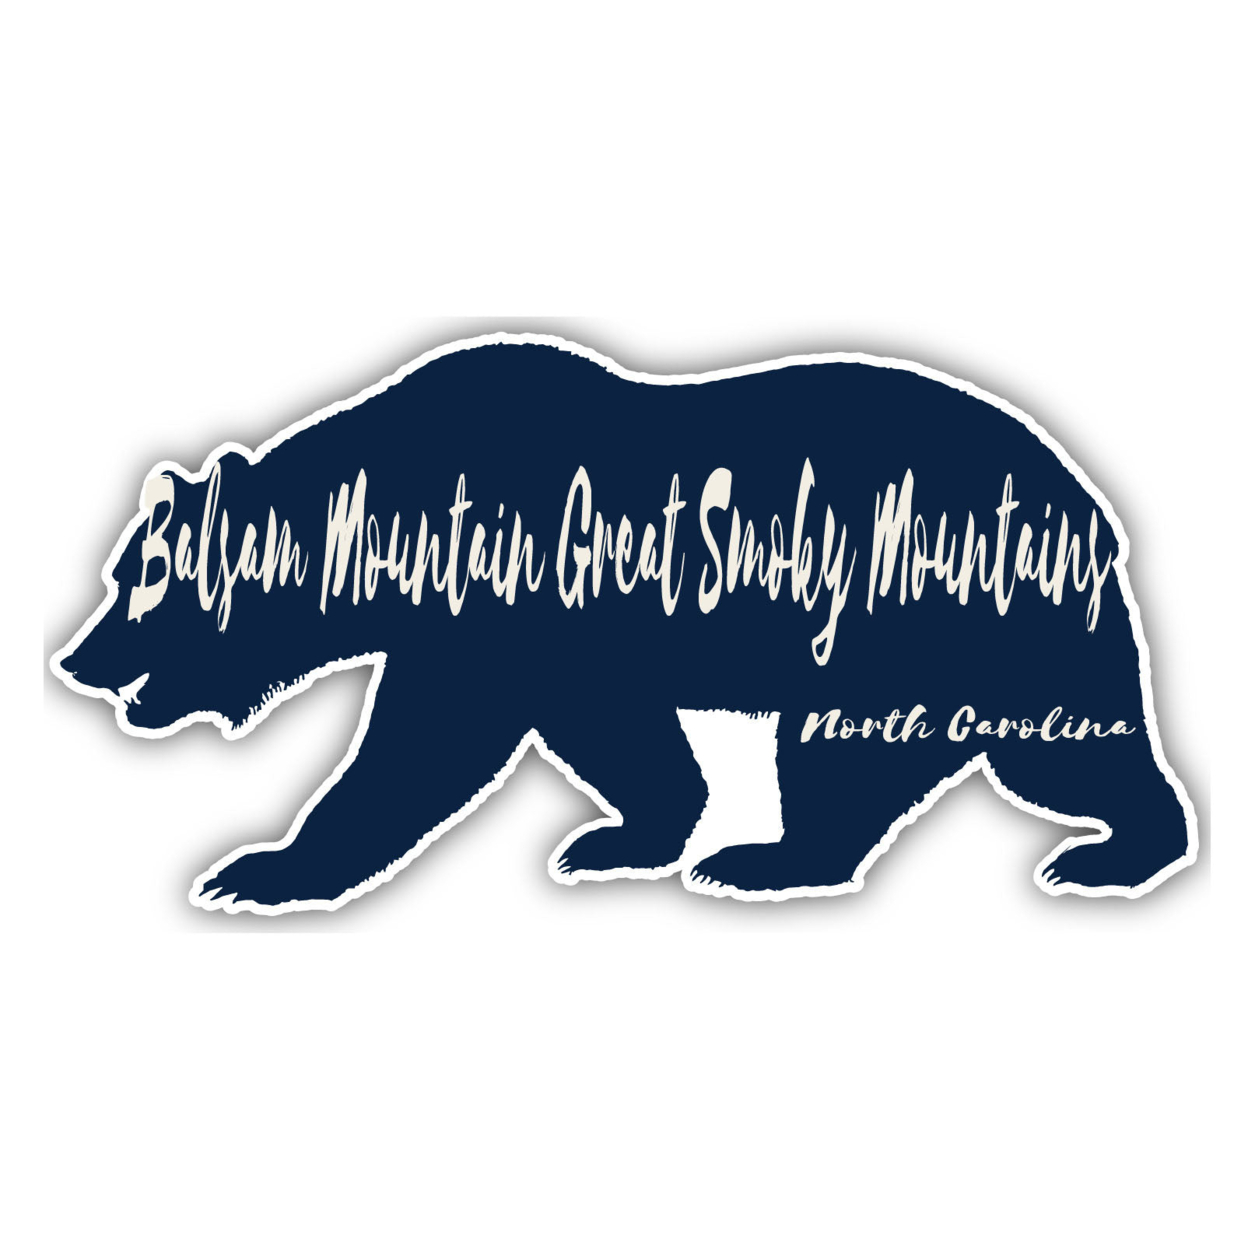 Balsam Mountain Great Smoky Mountains North Carolina Souvenir Decorative Stickers (Choose Theme And Size) - Single Unit, 4-Inch, Bear